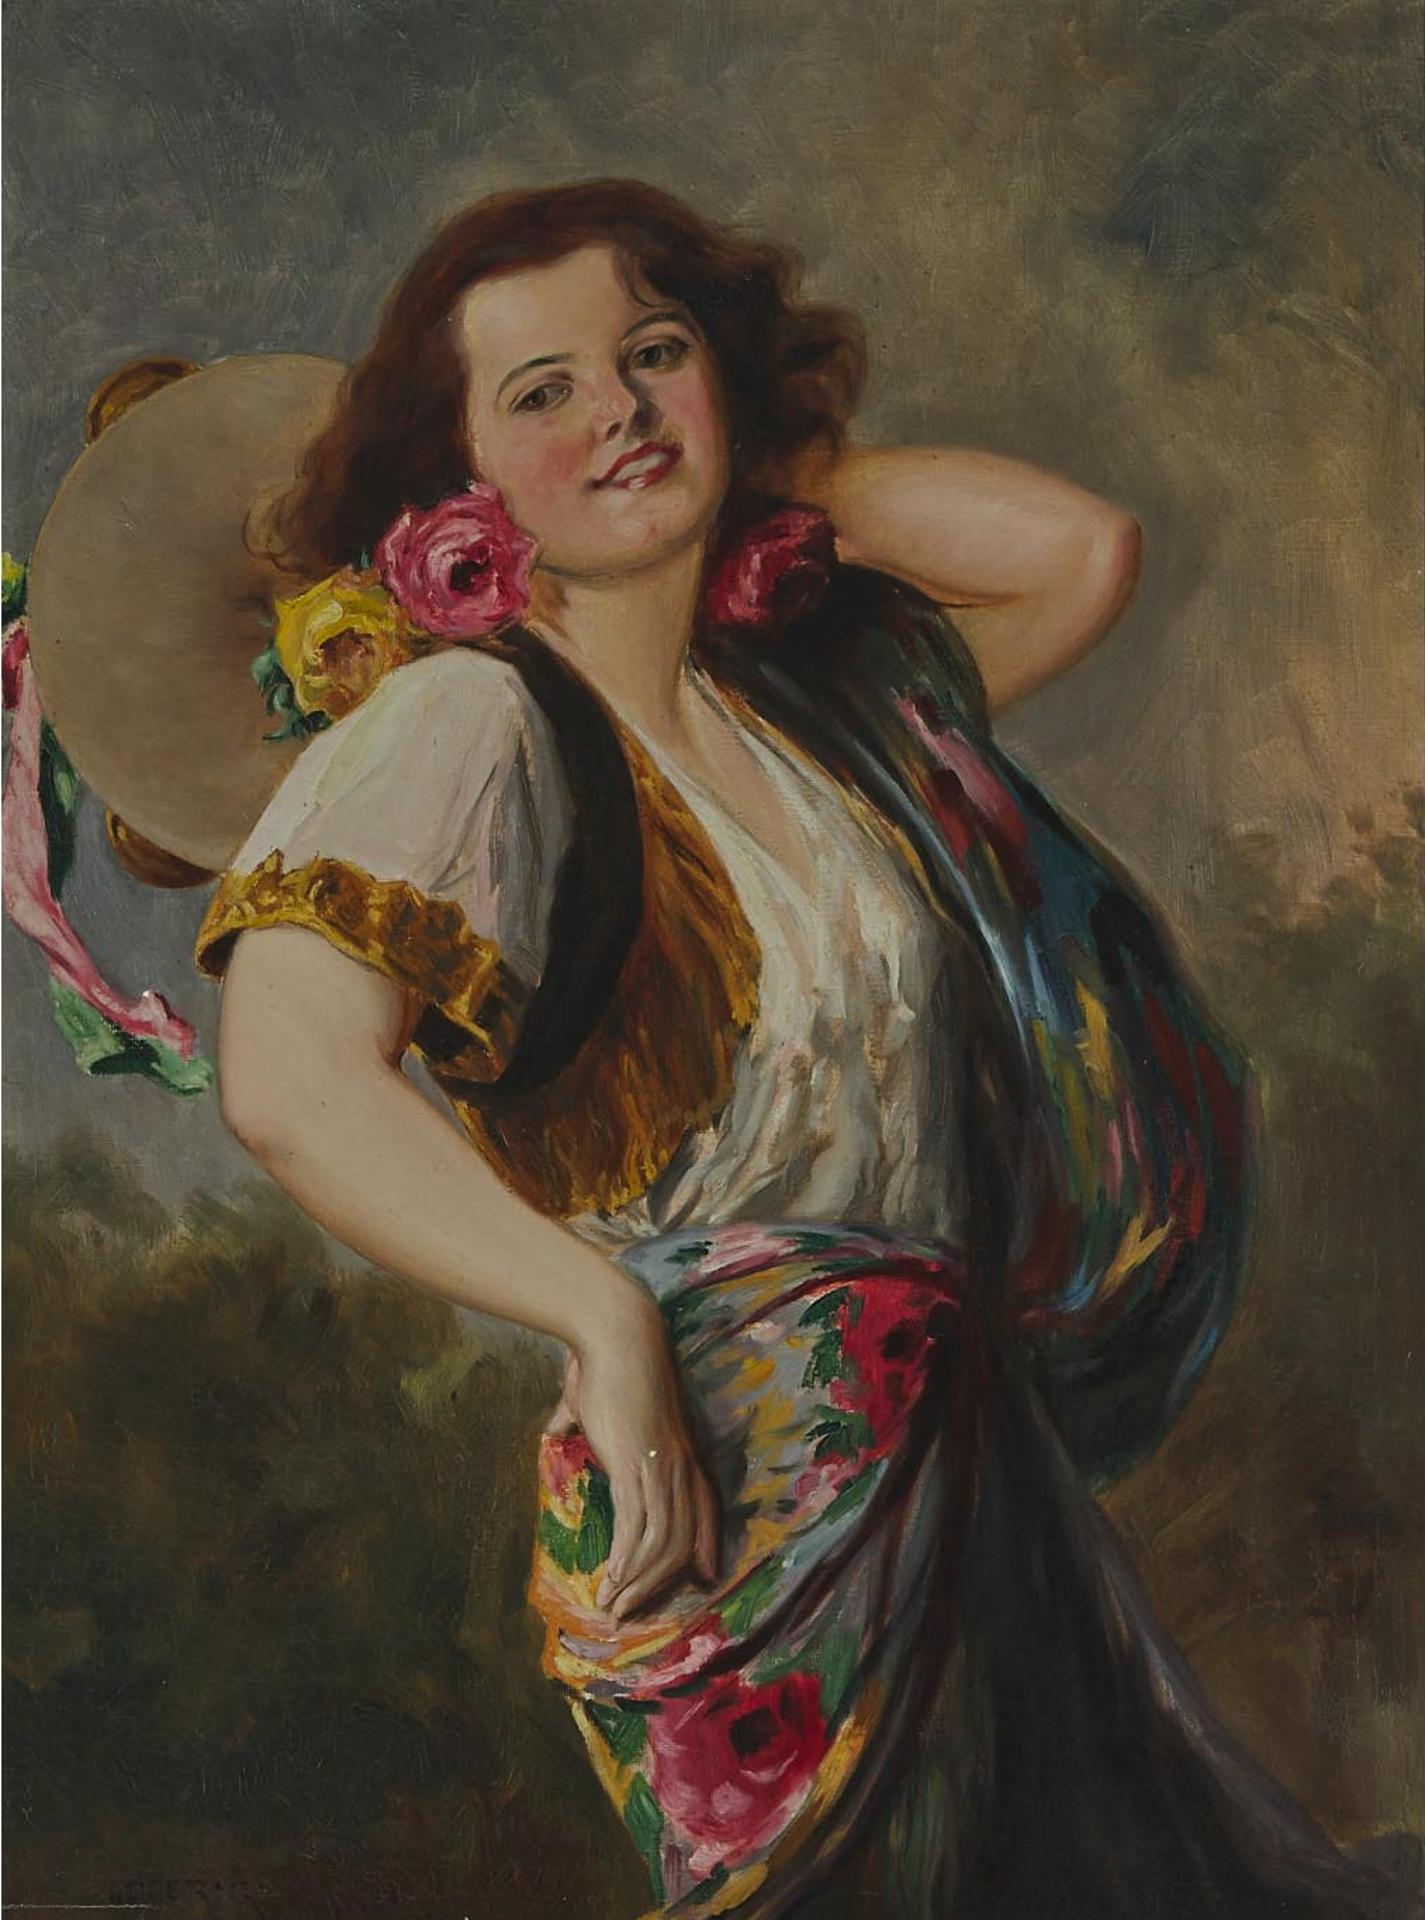 Richard Geiger (1870-1945) - Tambourine Dancer With Floral Shawl